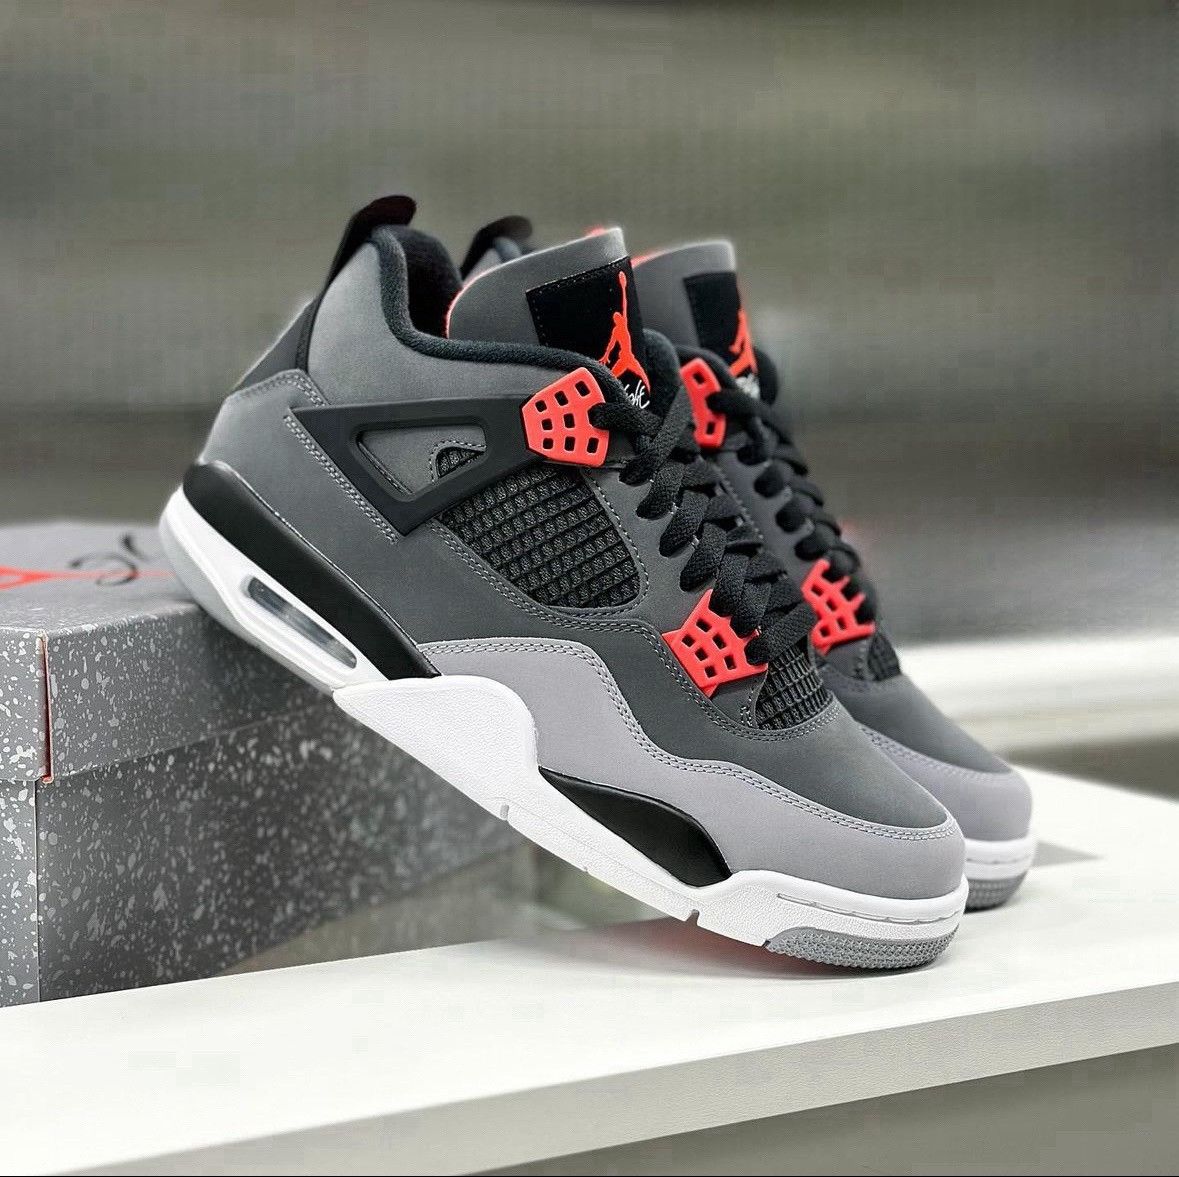 Pre-owned Jordan Nike Jordan Brand Retro 4 “grey Suede” Shoes In Infrared Black